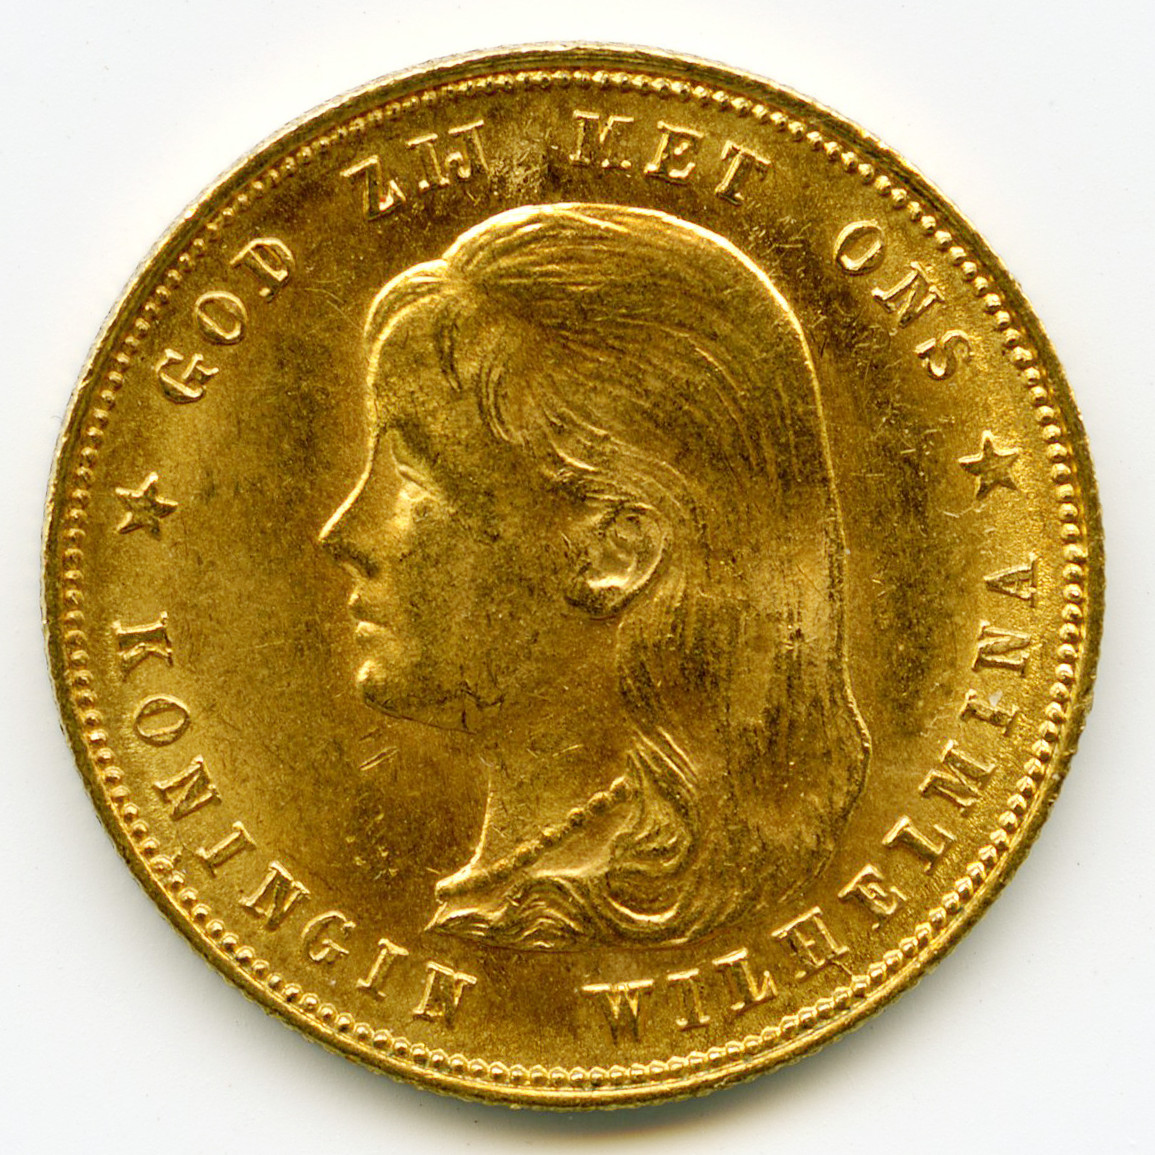 Pays-Bas - 10 Gulden - 1897 avers